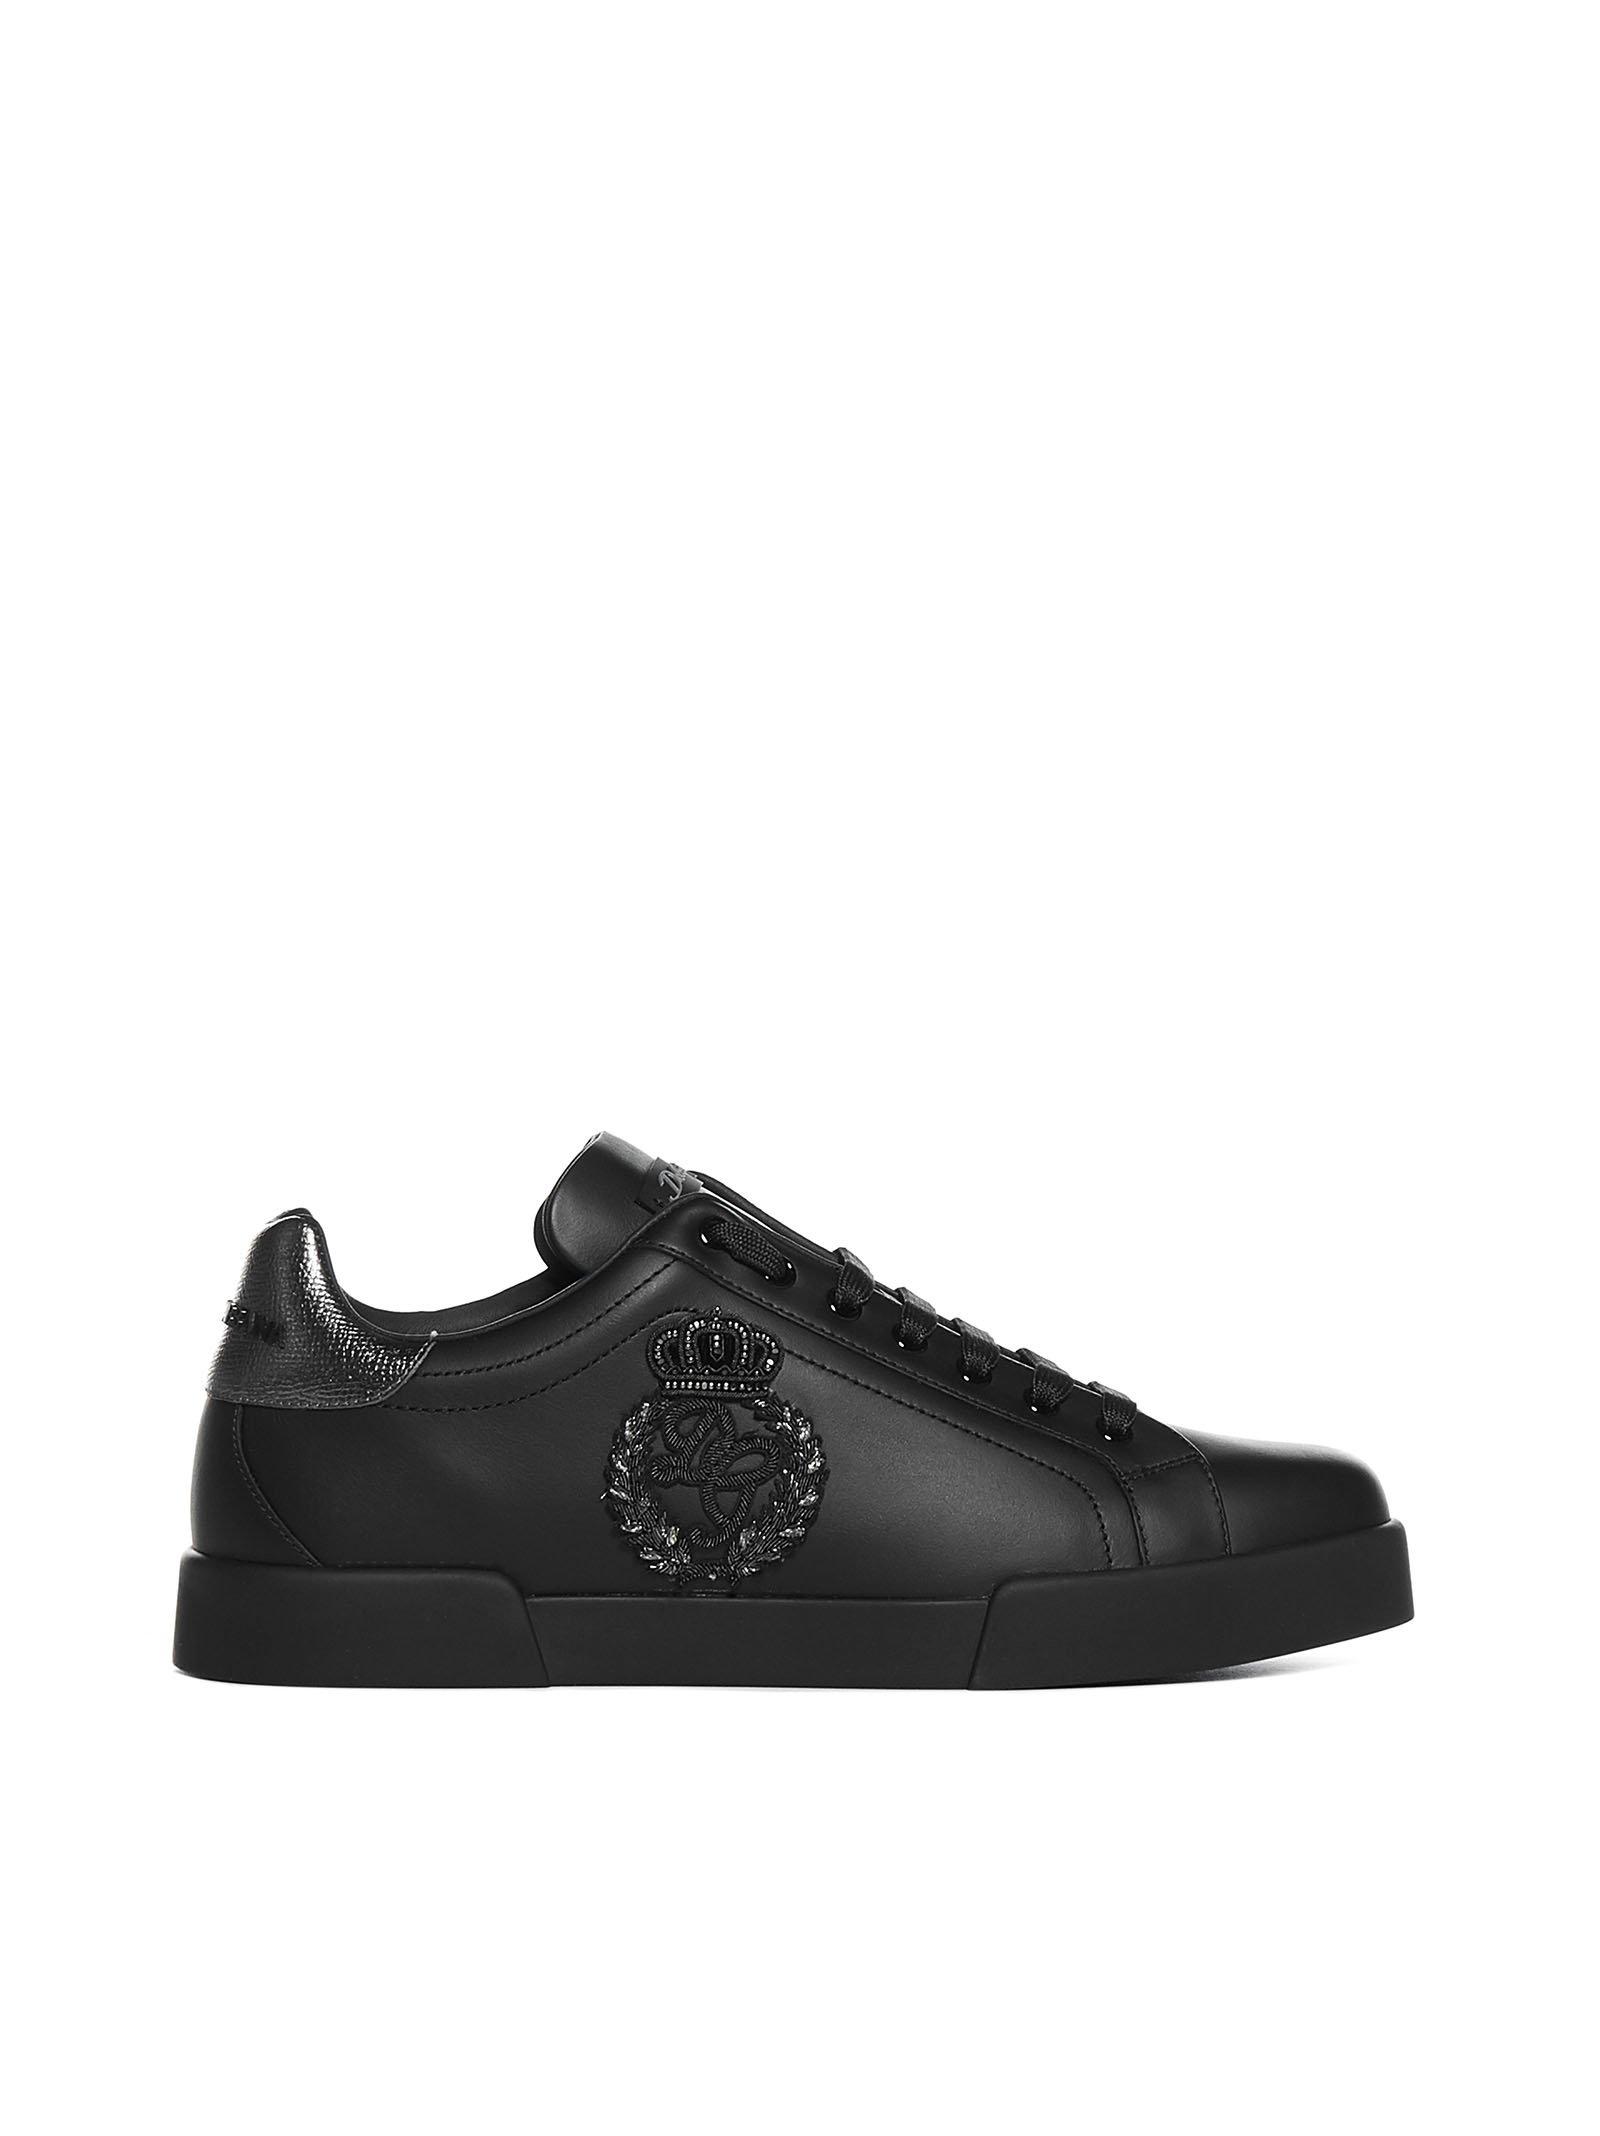 Dolce & Gabbana Leather Portofino Sneakers in Black for Men - Lyst